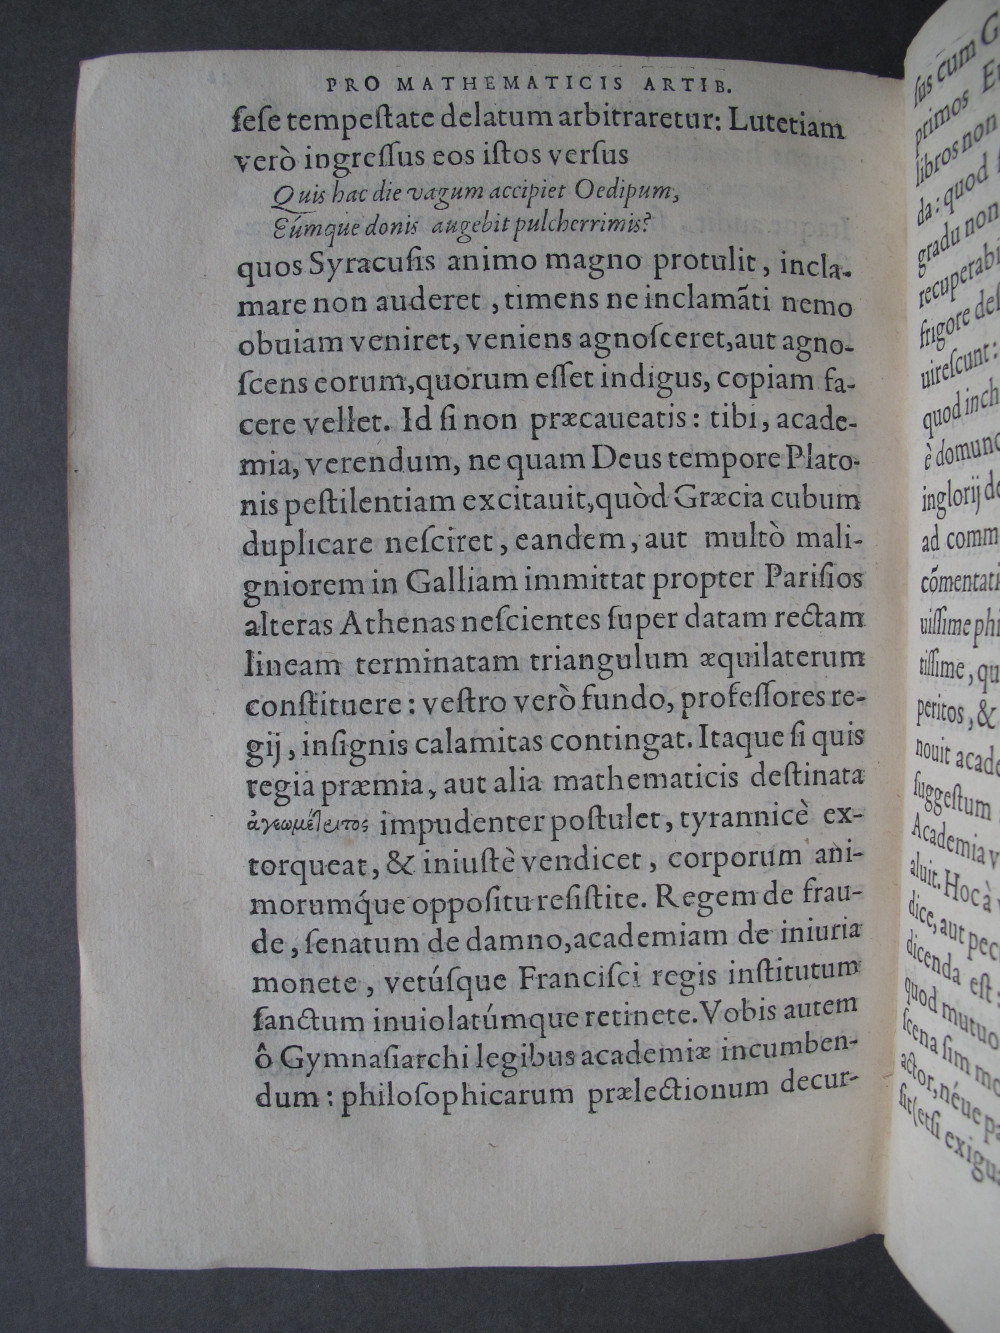 Folio 22 verso